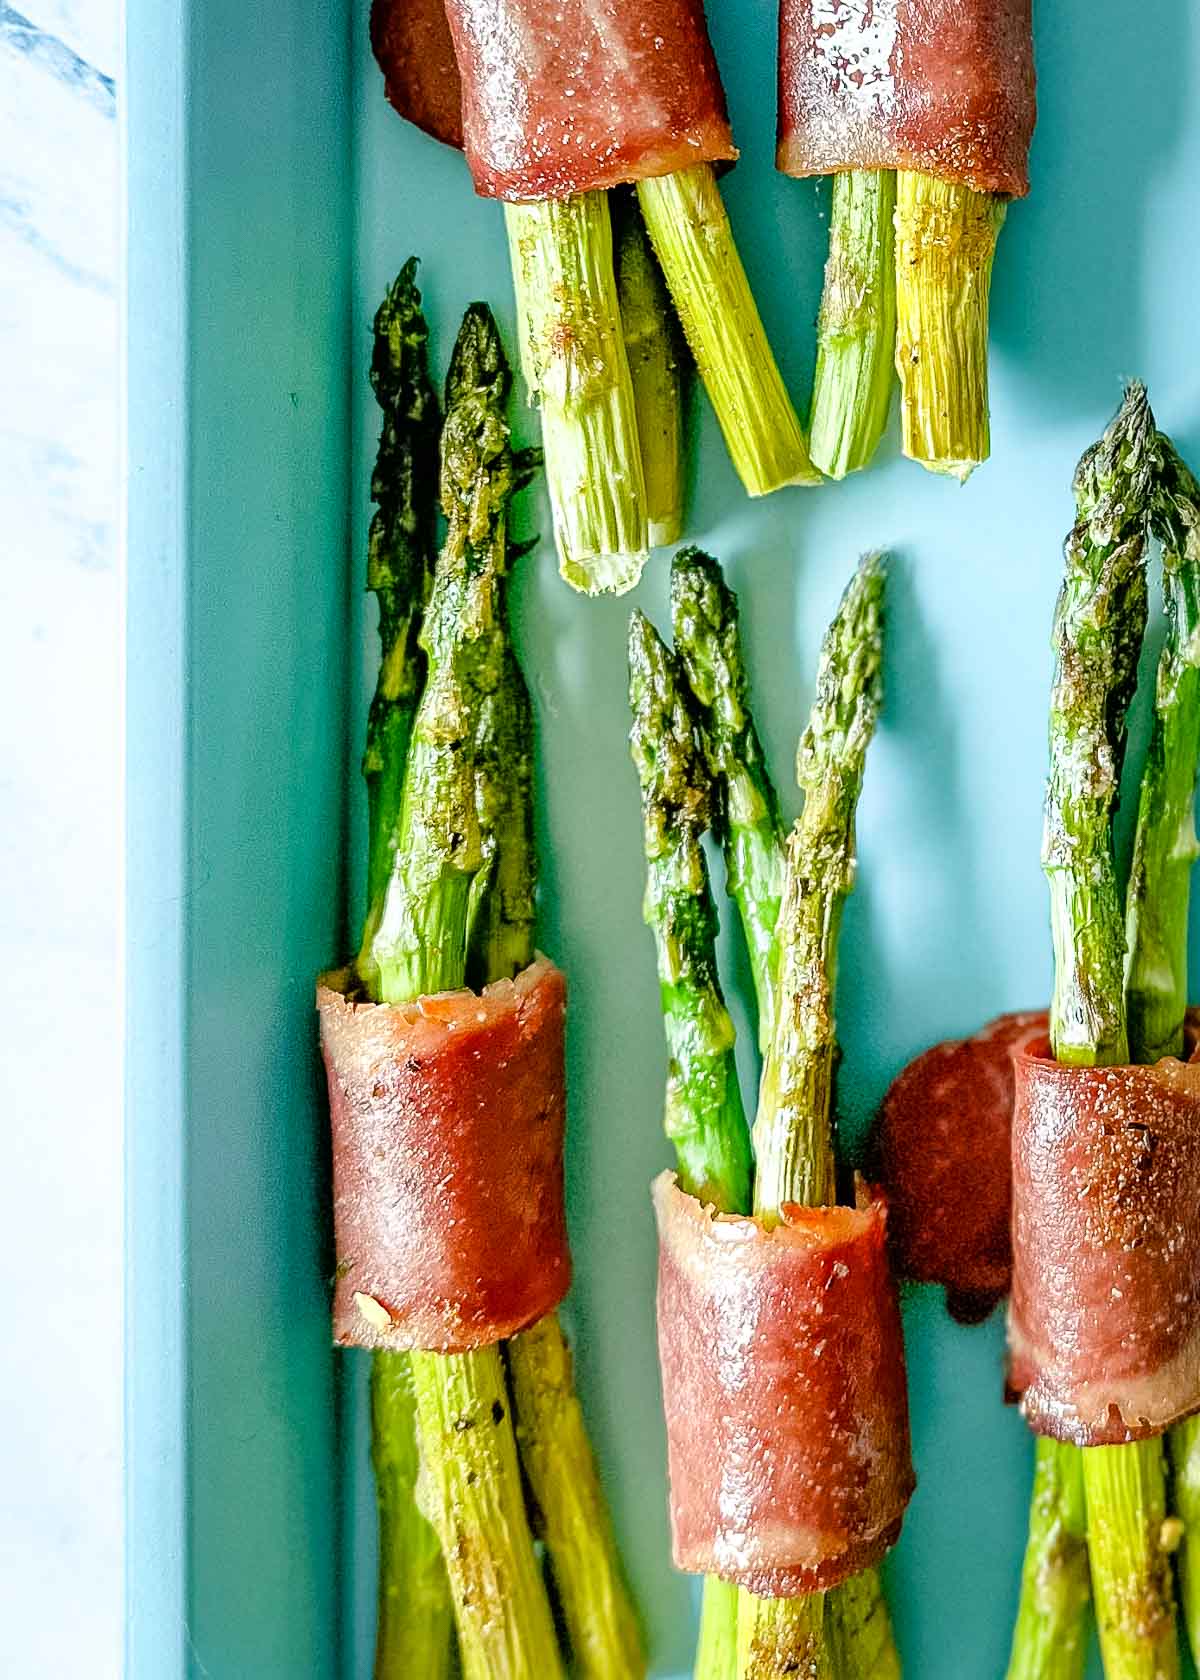 turkey bacon wrapped asparagus bundles on a blue sheet tray.